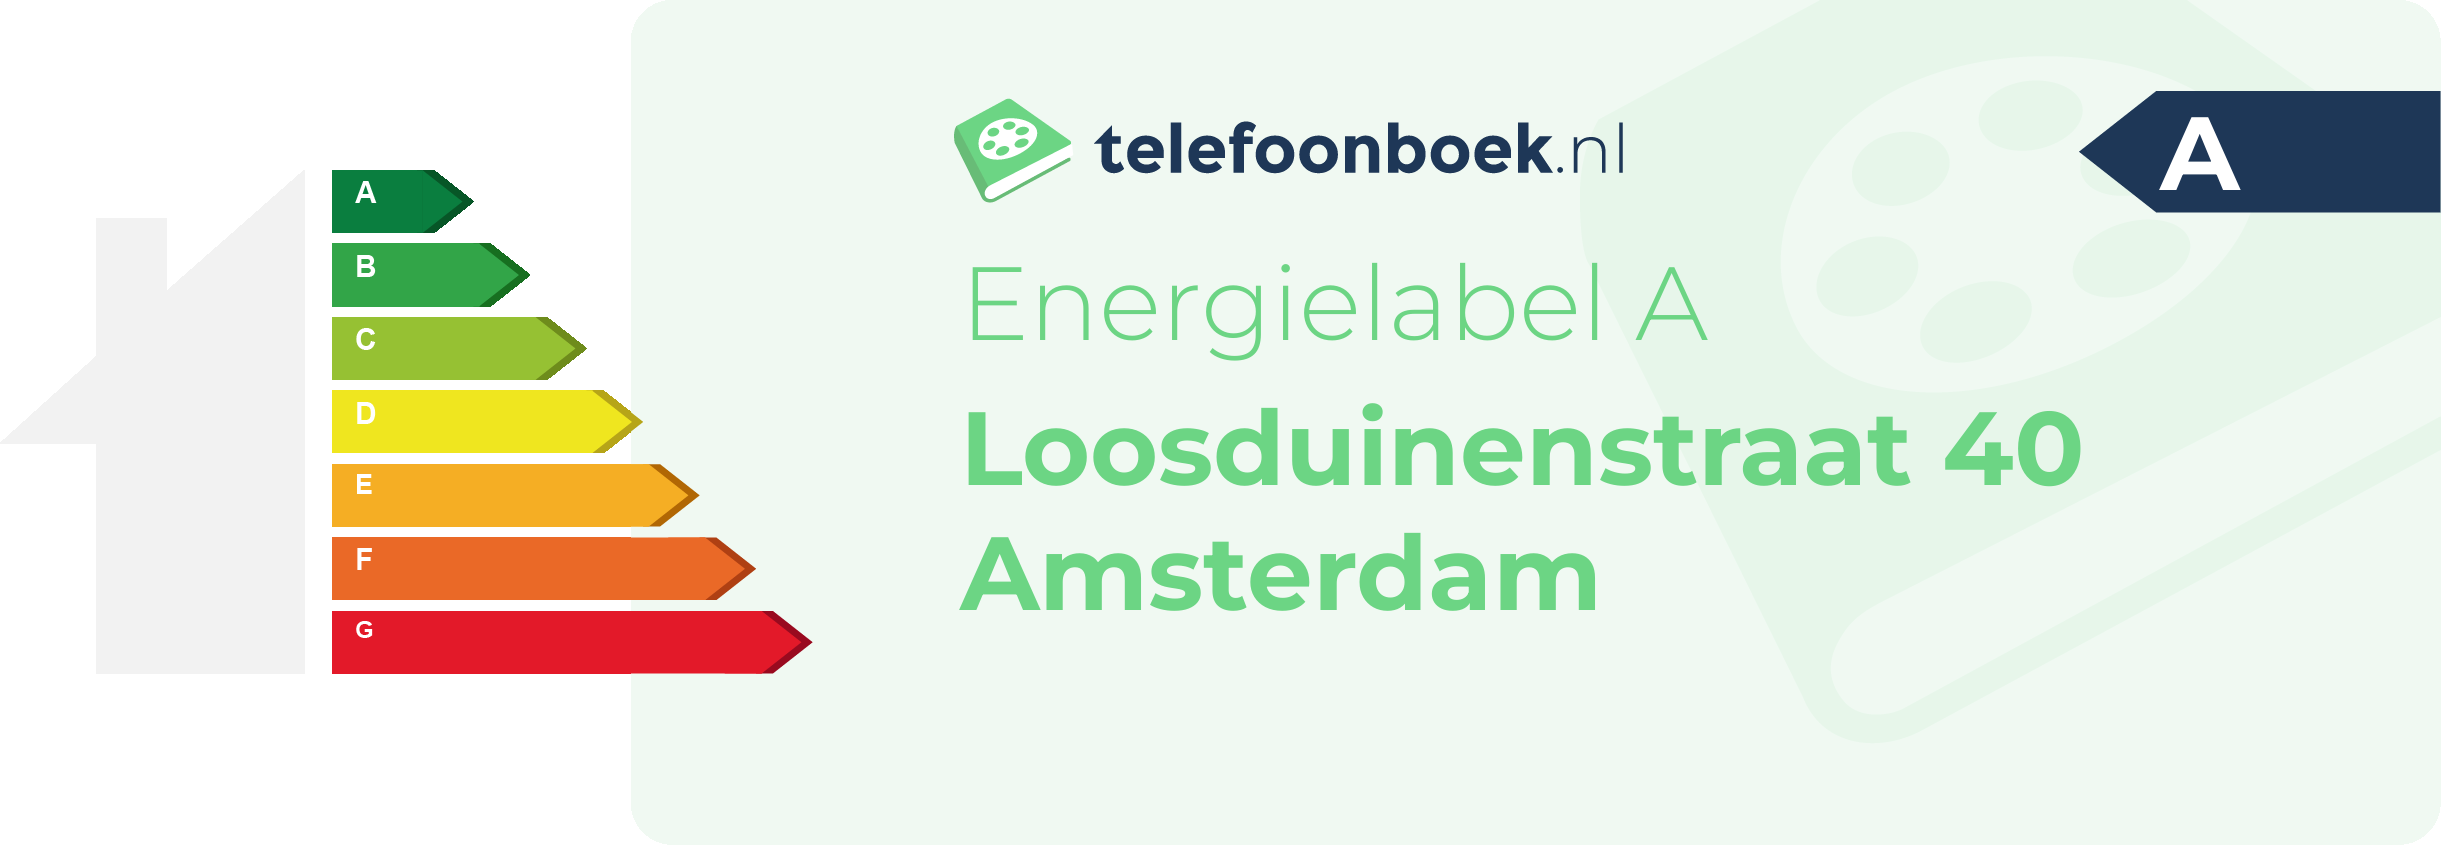 Energielabel Loosduinenstraat 40 Amsterdam